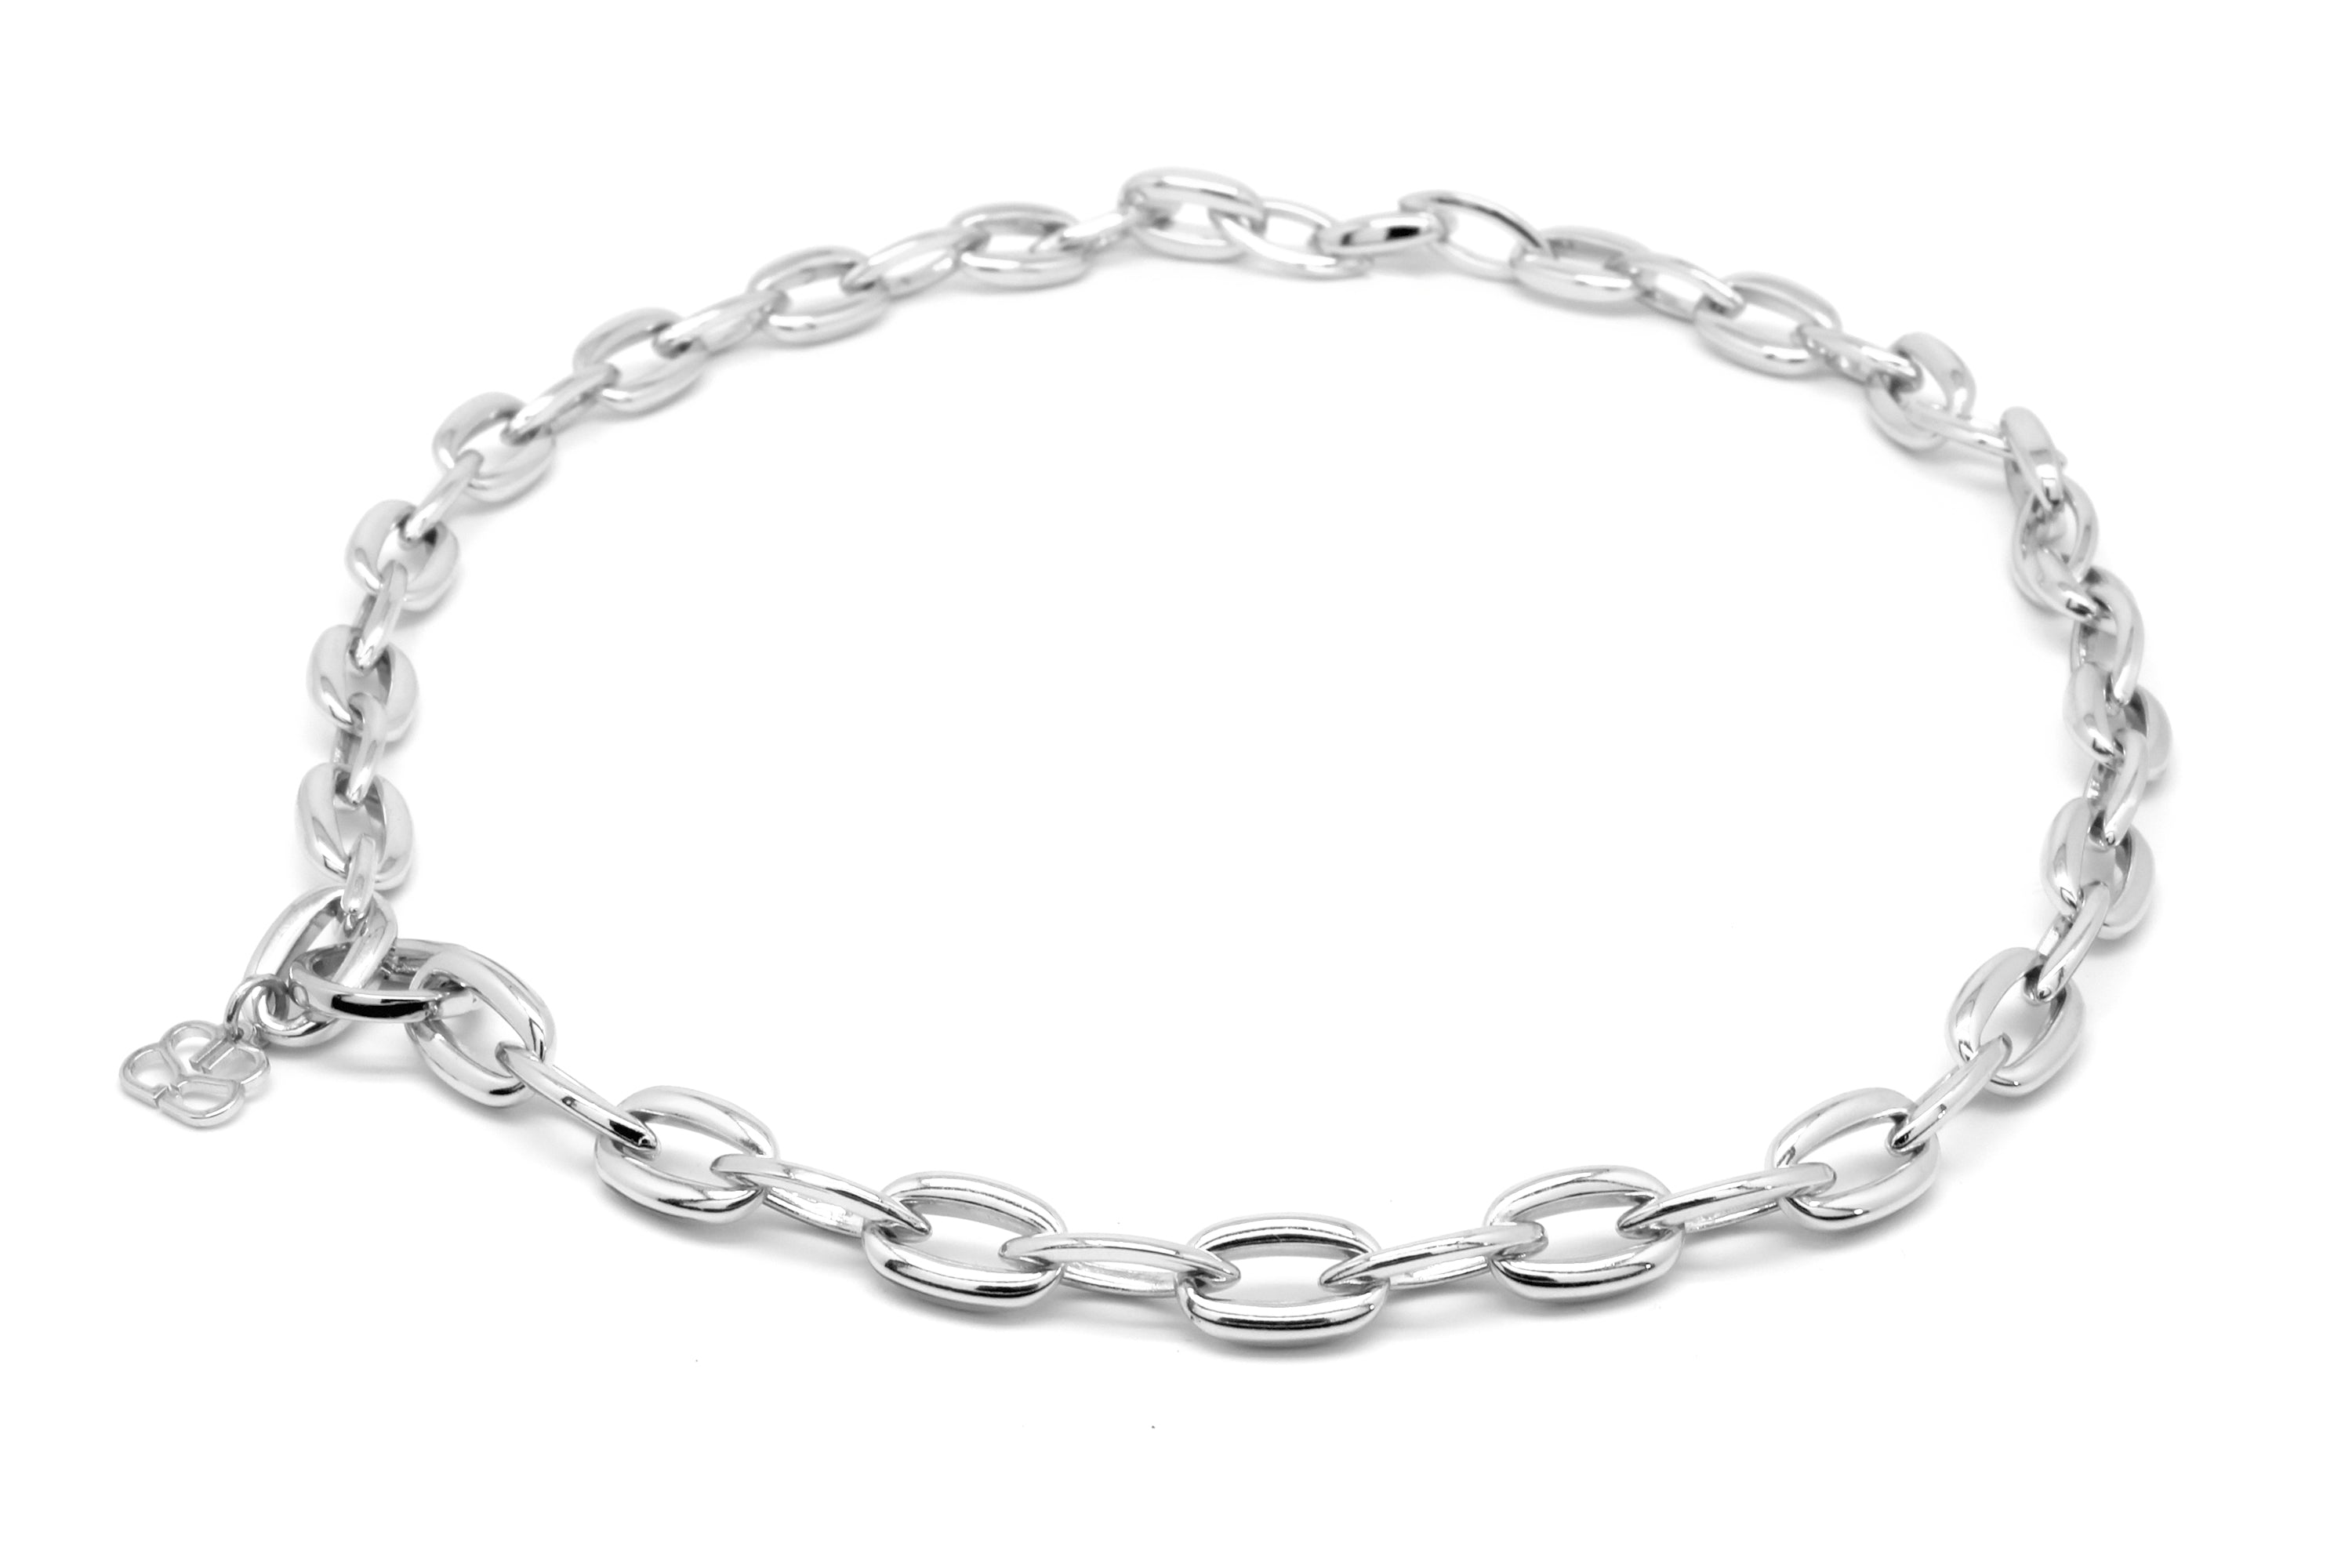 Errai Silver Chunky Chain Necklace - Boho Betty